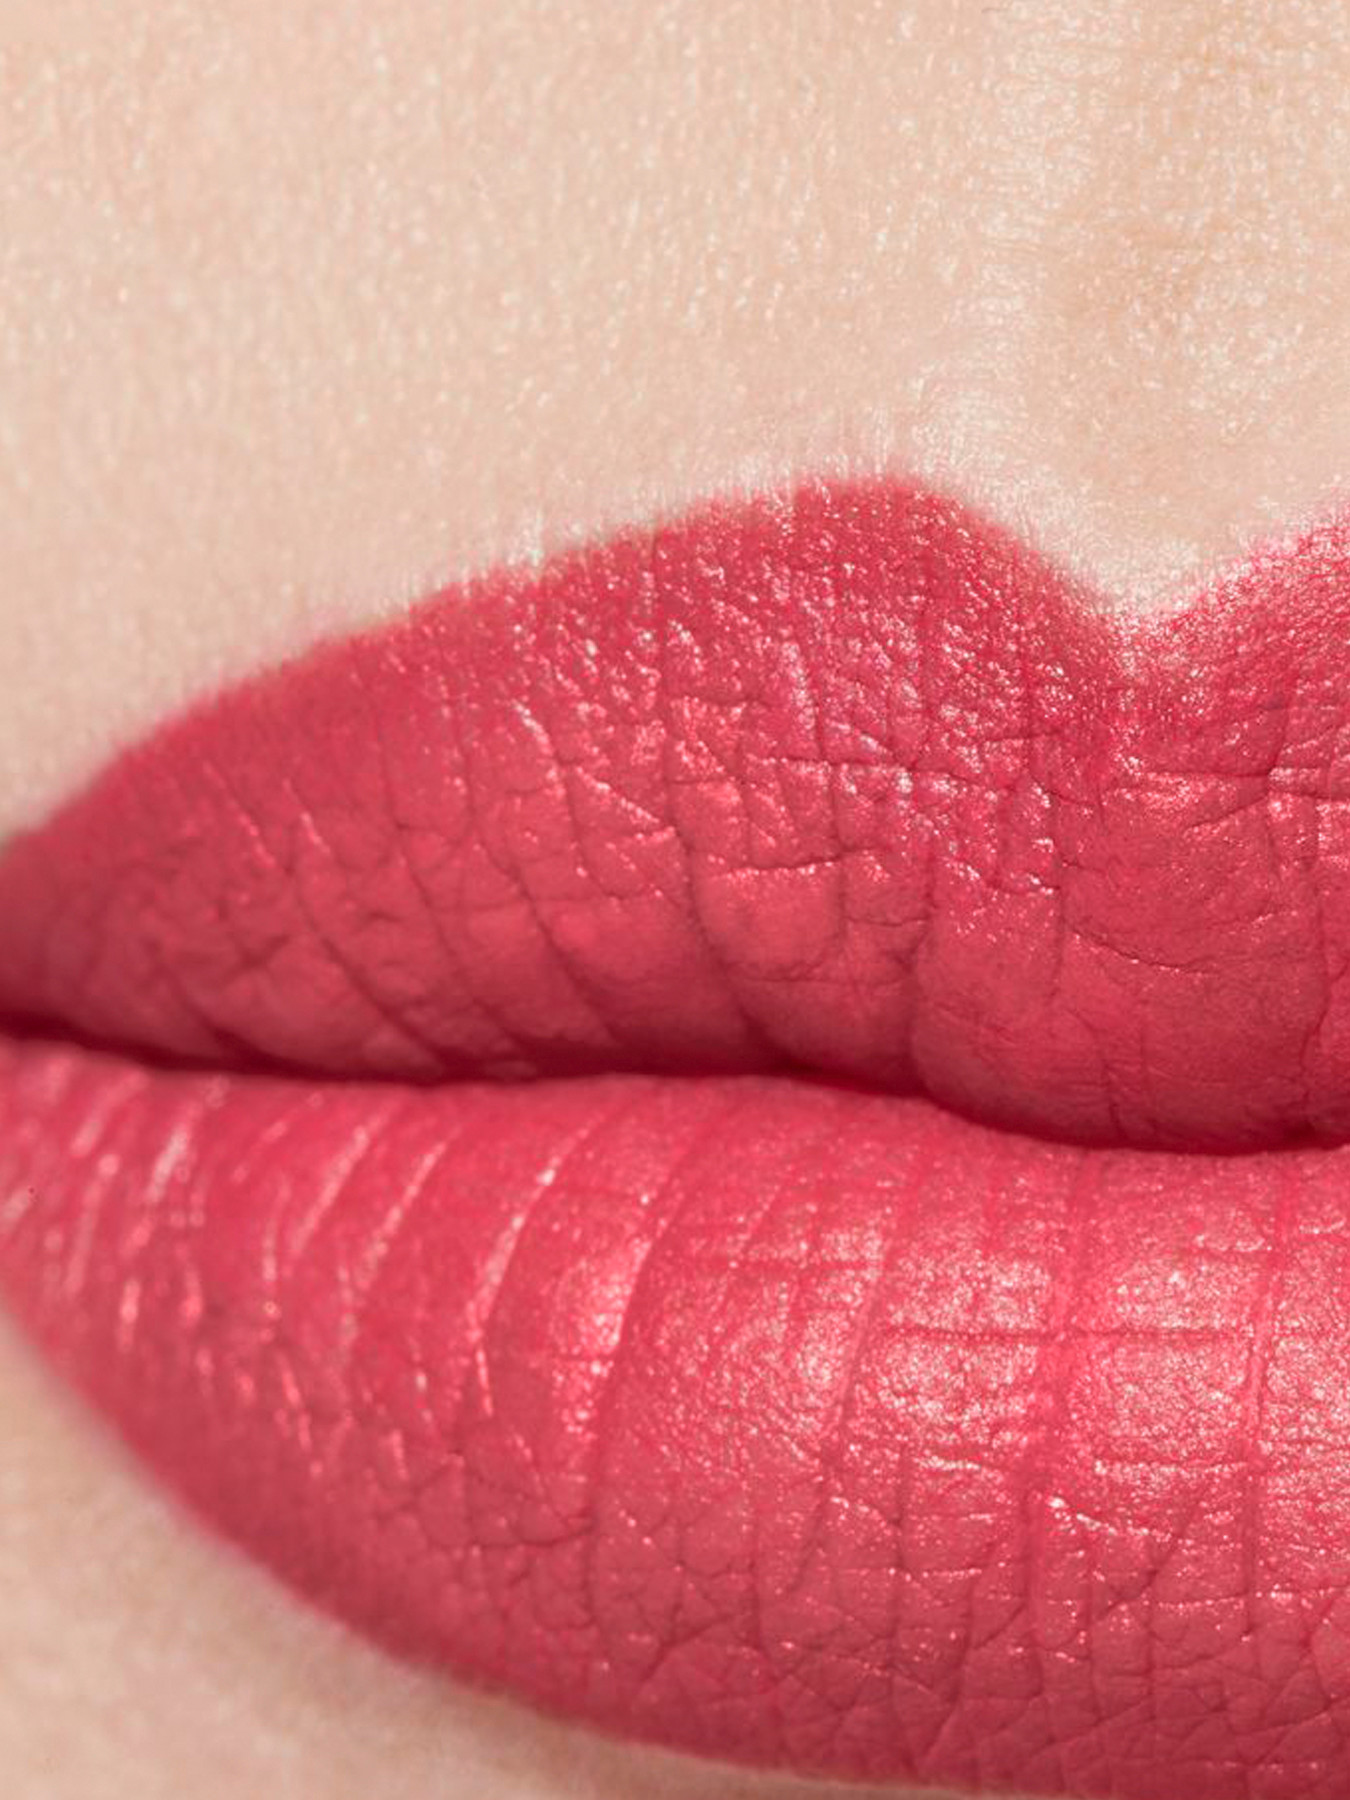 CHANEL, Makeup, Bnib Chanel Rouge Allure Lipstick 94 Sensibilite